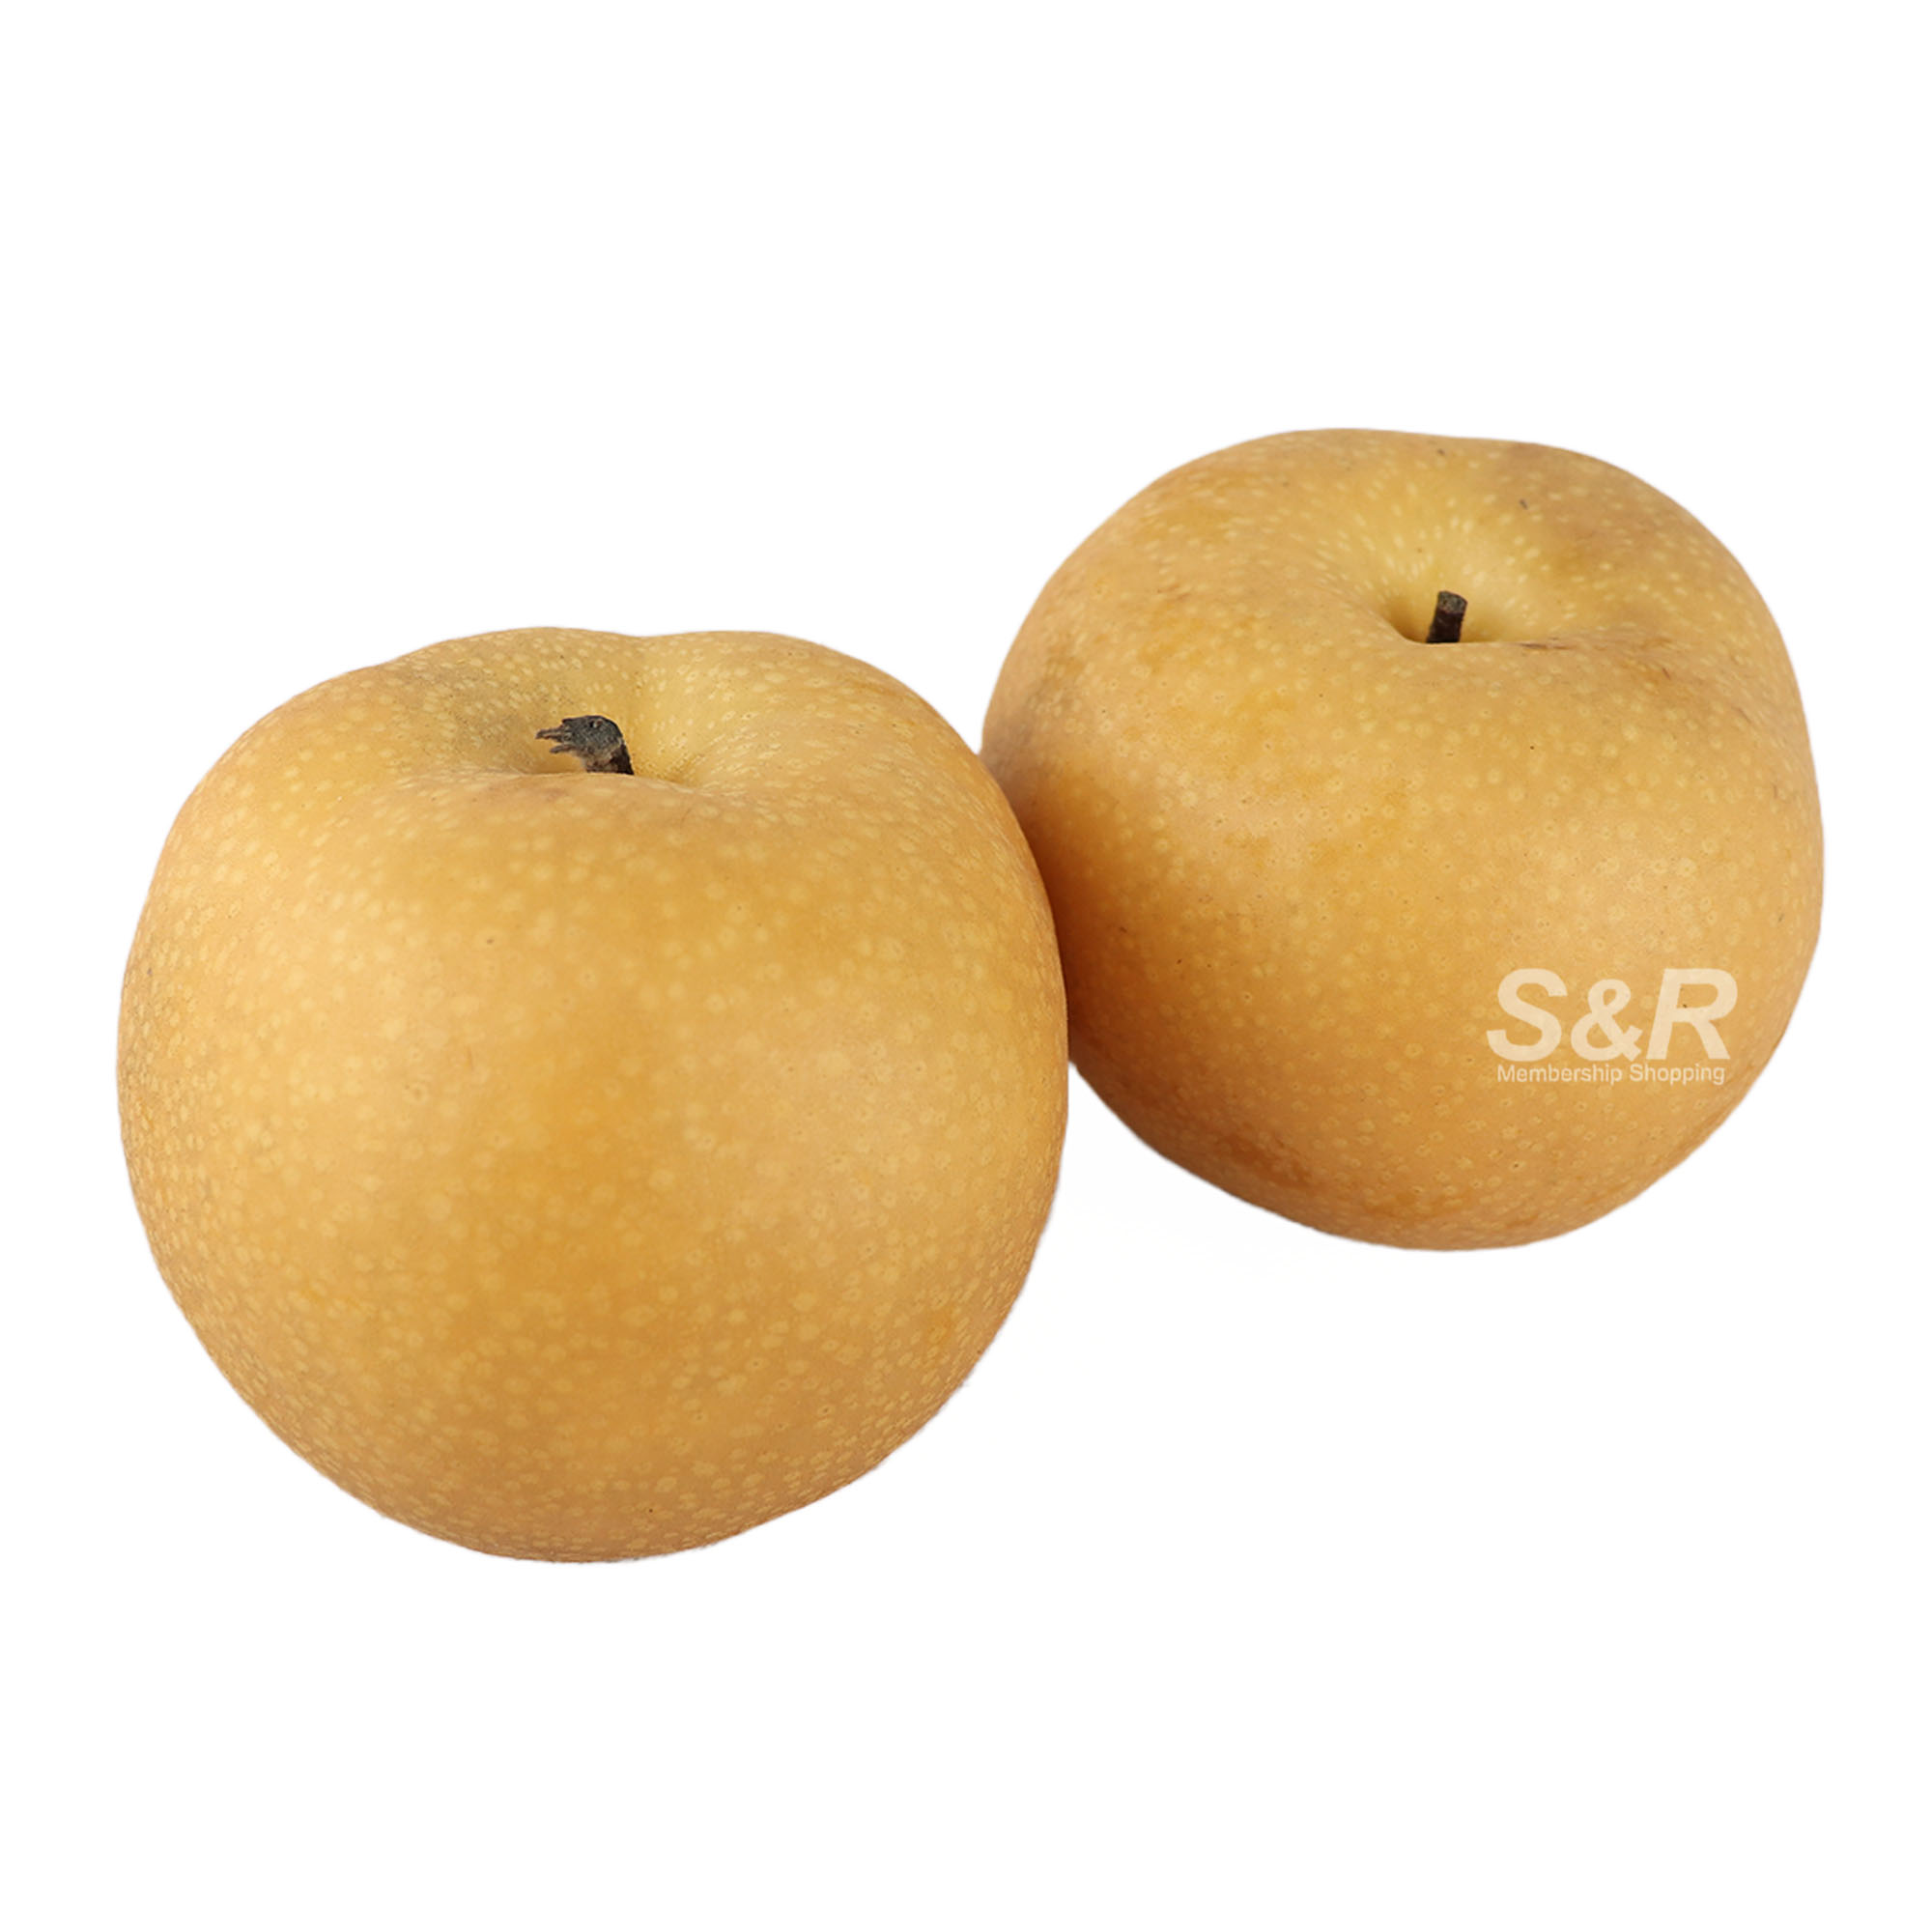 S&R Korean Pears 2pcs